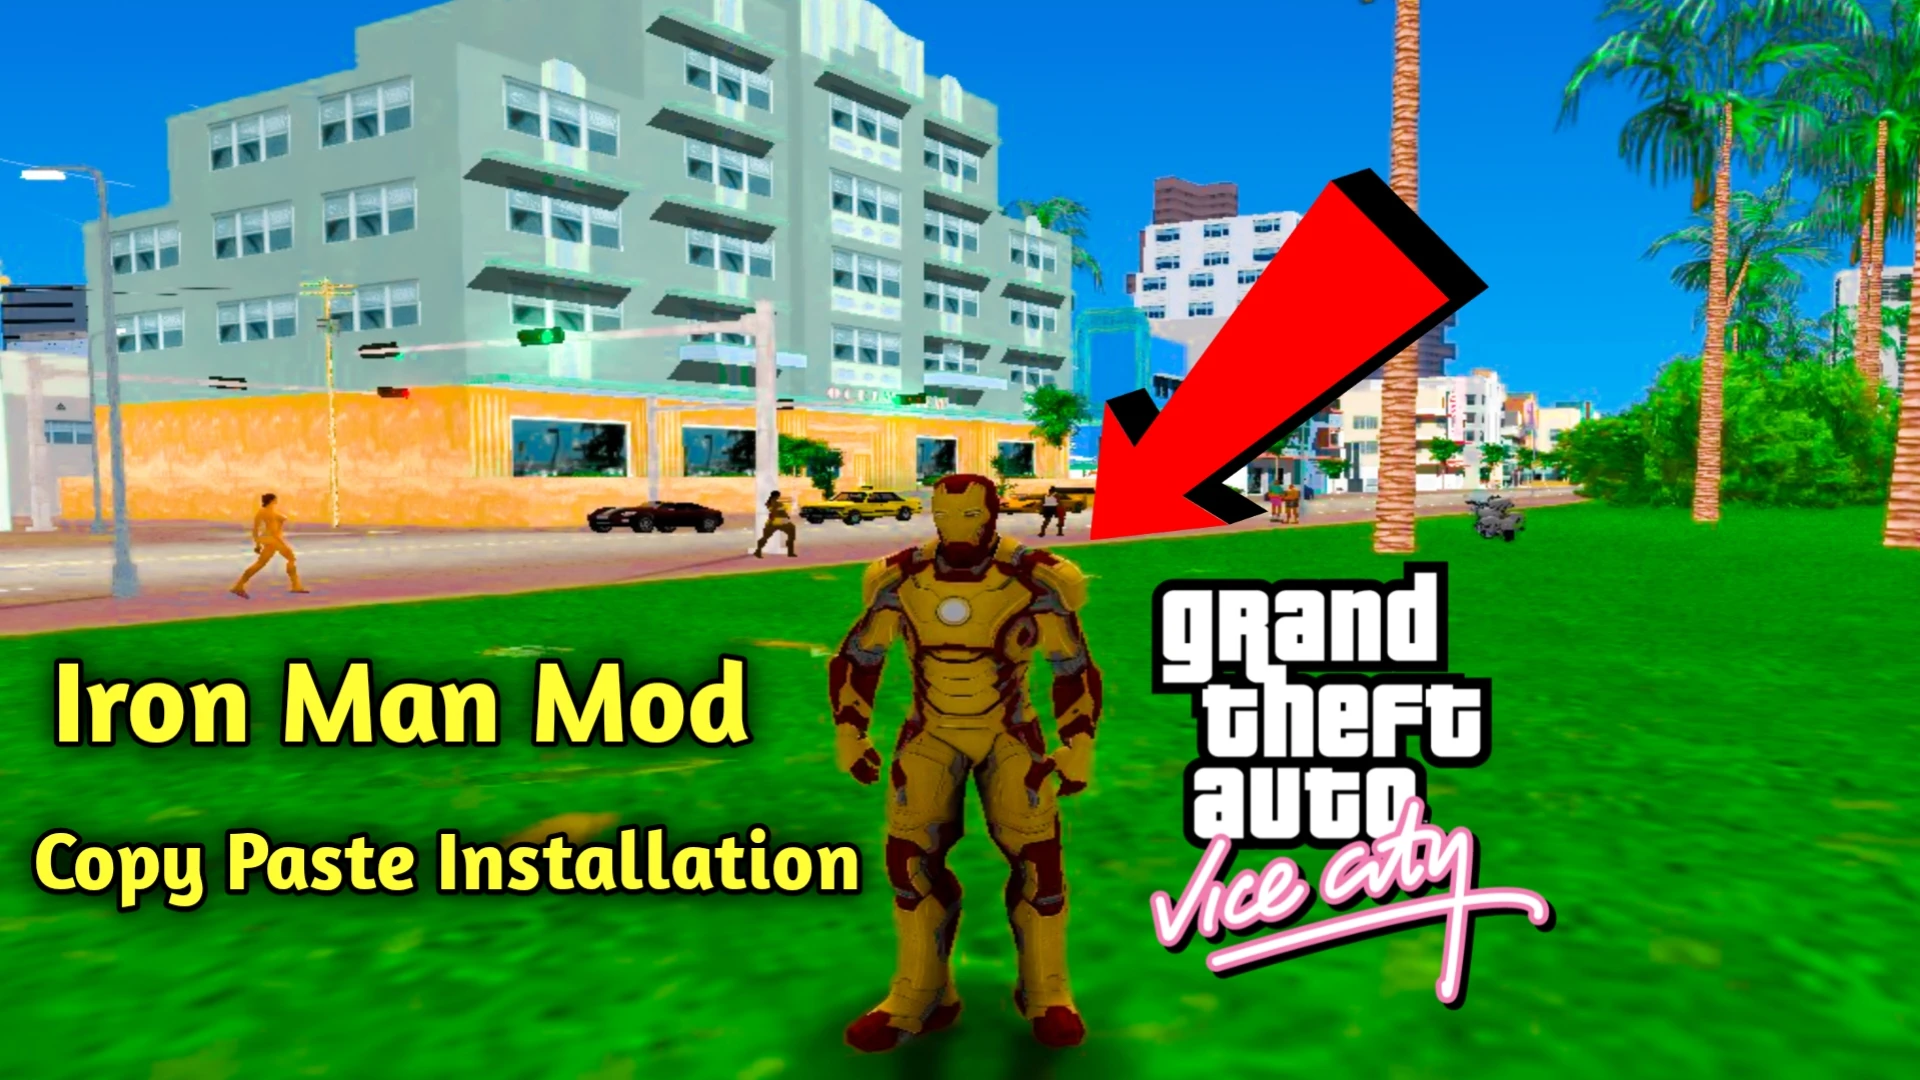 Grand Theft Auto: Vice City Mod apk [Unlimited money][Mod Menu